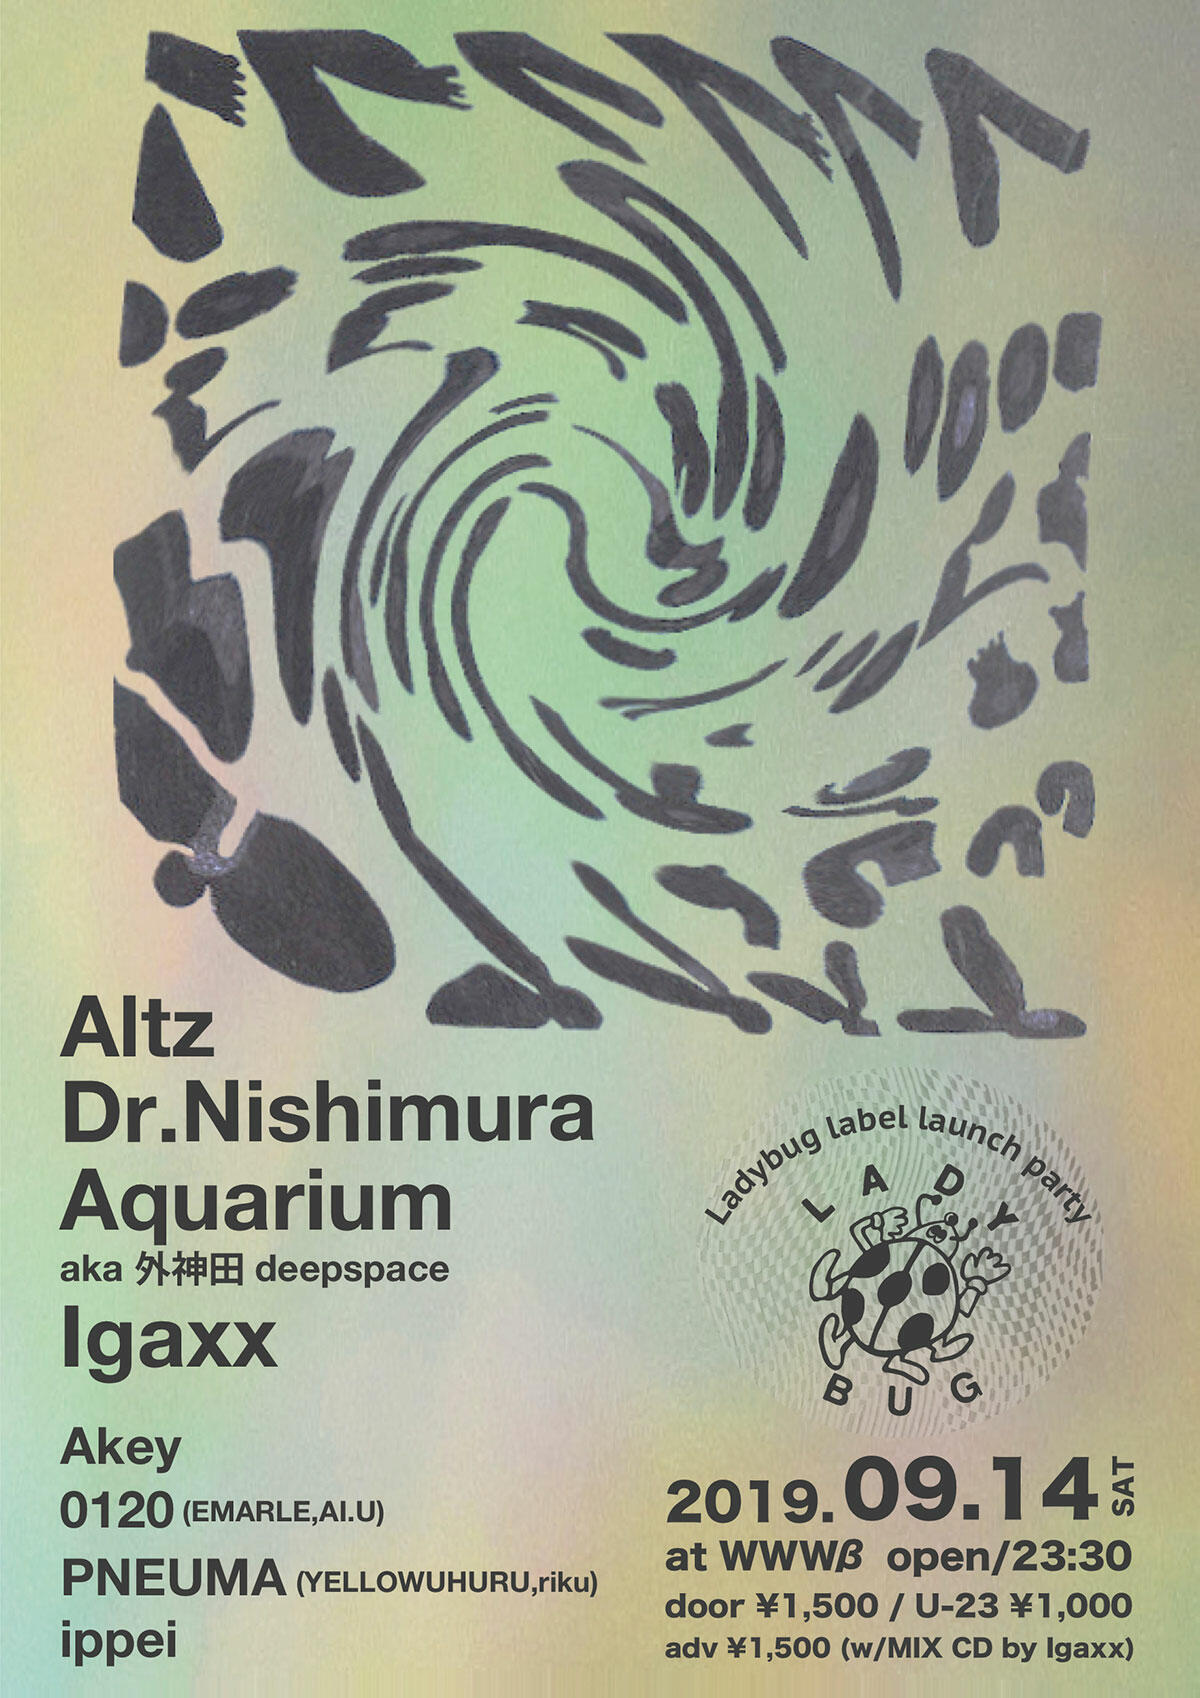 Altz / Dr.Nishimura / Aquarium aka 外神田deepspace / Igaxx / akey / 0120(EMARLE+AI.U) / PNEUMA(YELLOWUHURU+riku) /  ippei